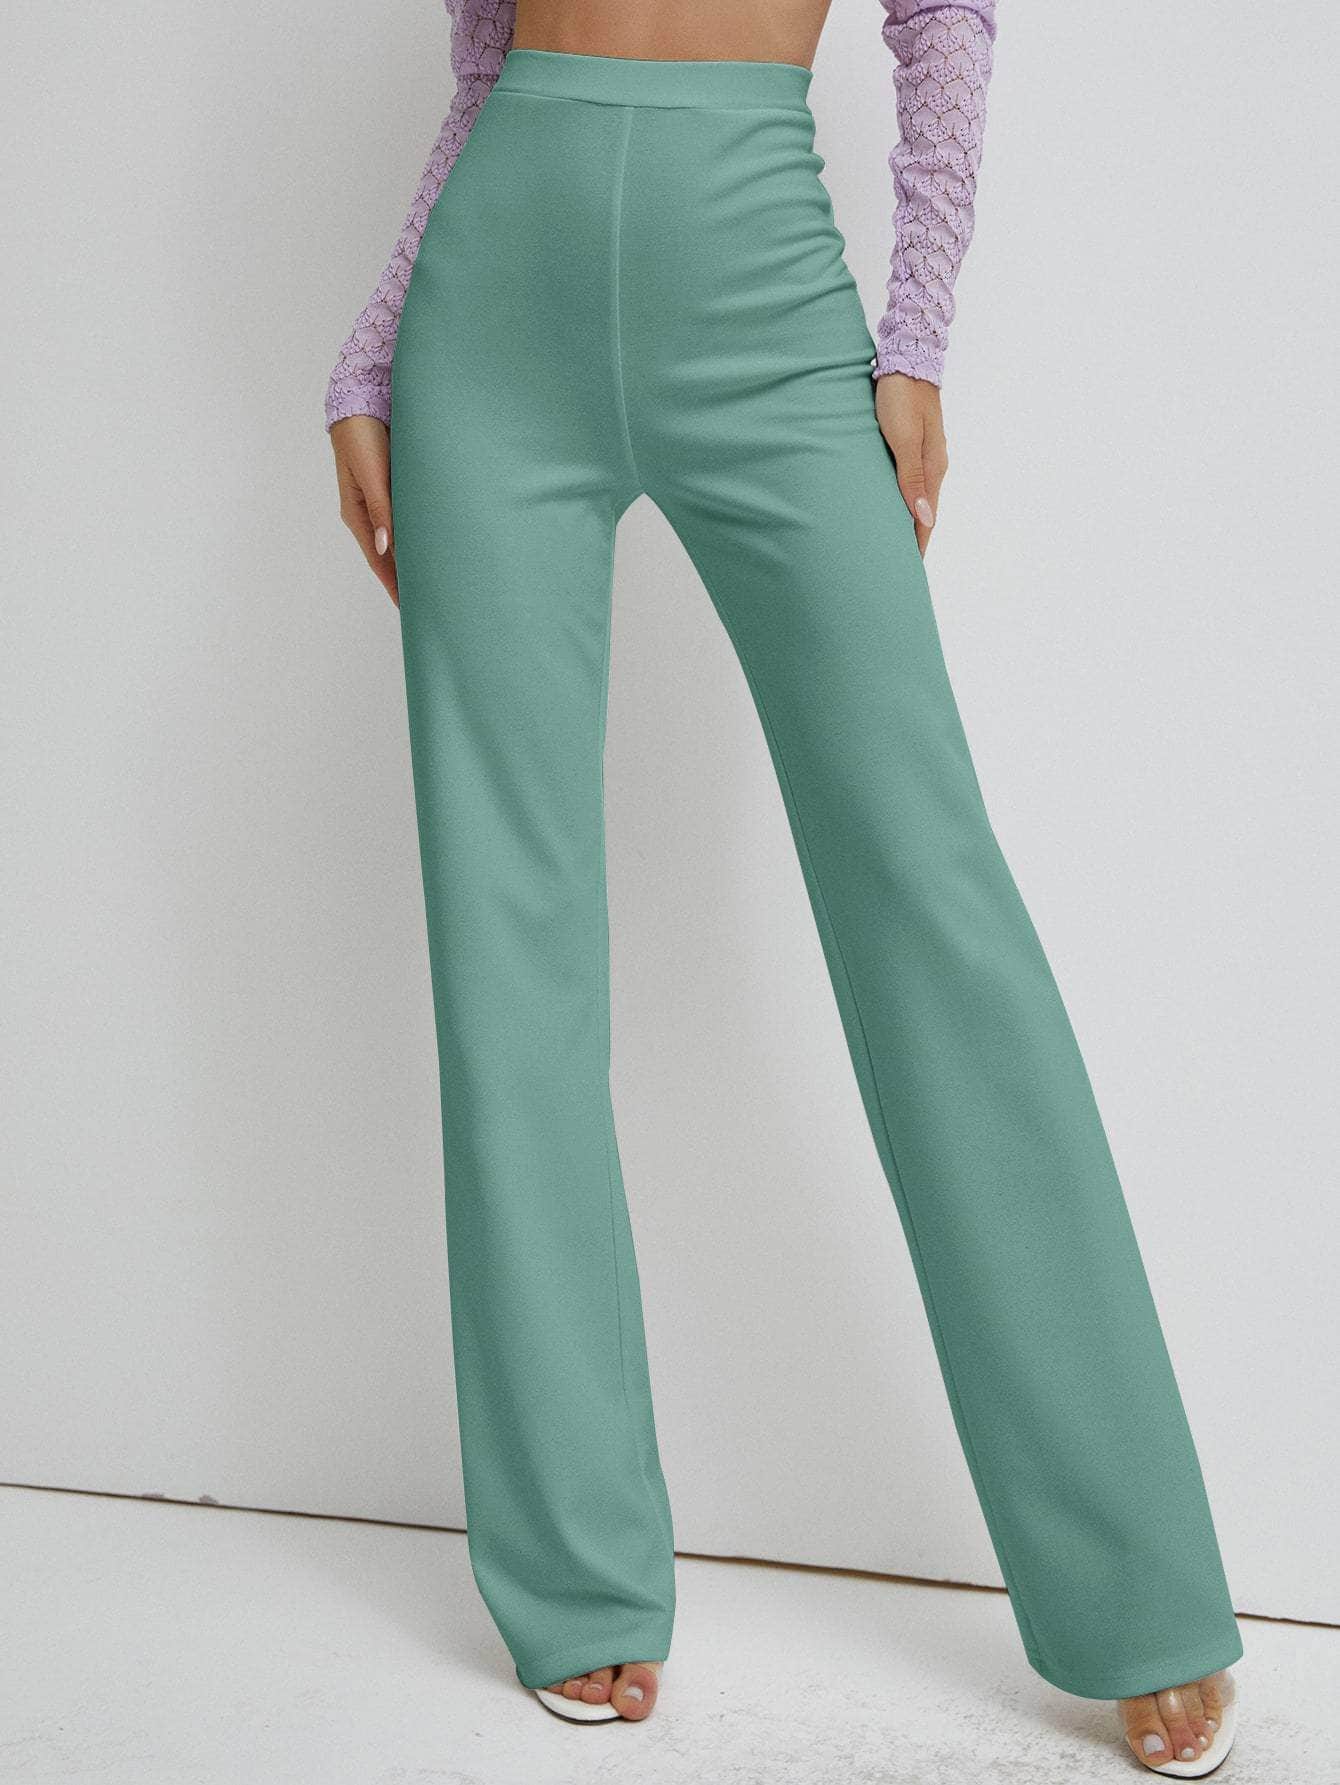 Muybonita.co Mujer/Pantalones/pantaloneselegantes3 verde menta / S pantalones de pierna recta de cintura alta